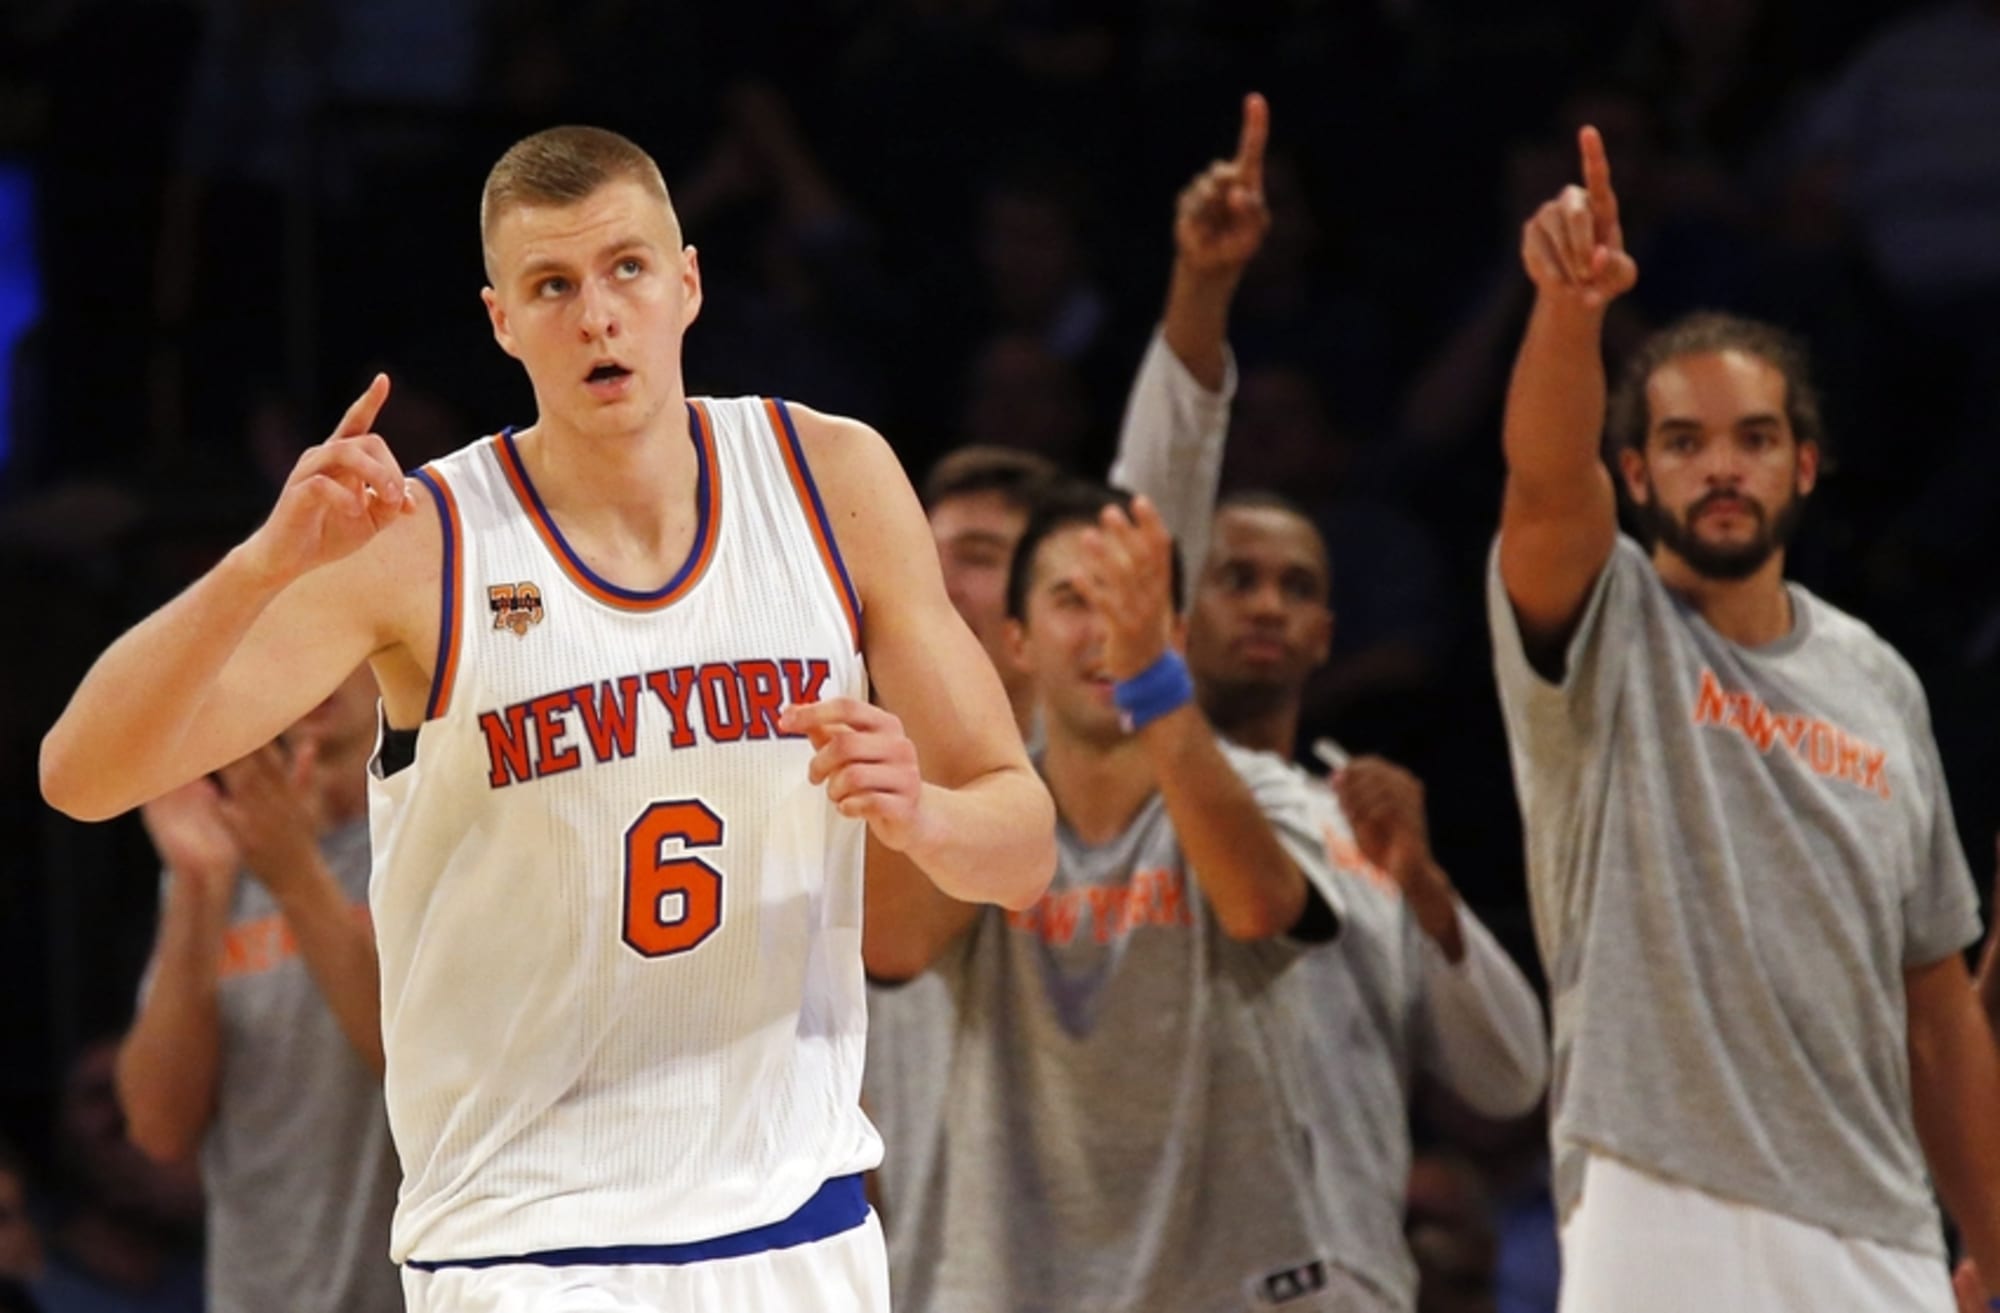 New York Knicks rookie Kristaps Porzingis fourth in jersey sales this season  - ESPN